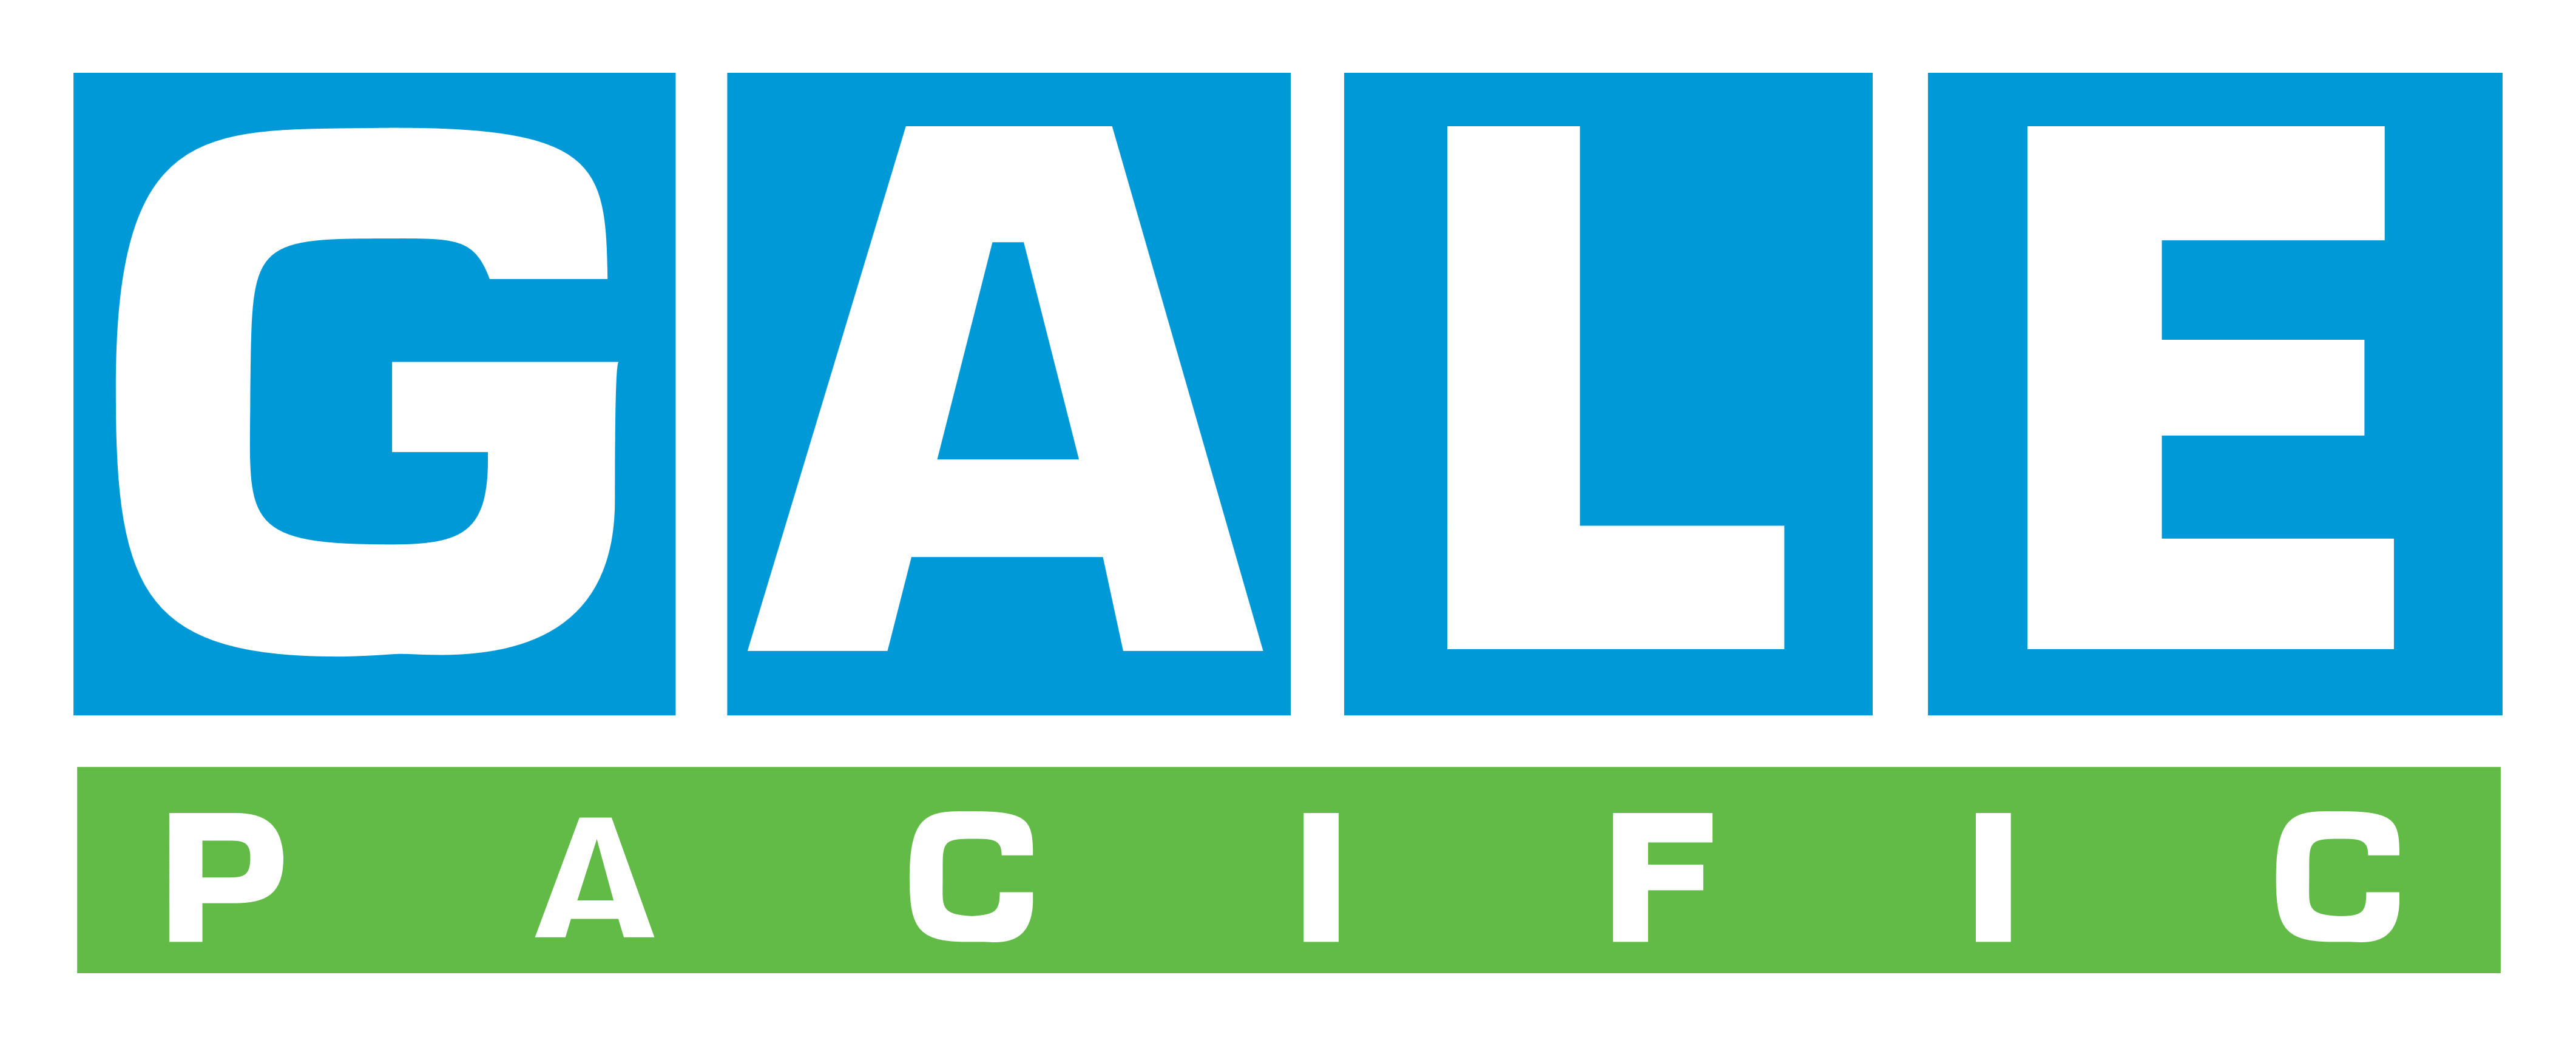 GALE Pacific logo, logotype